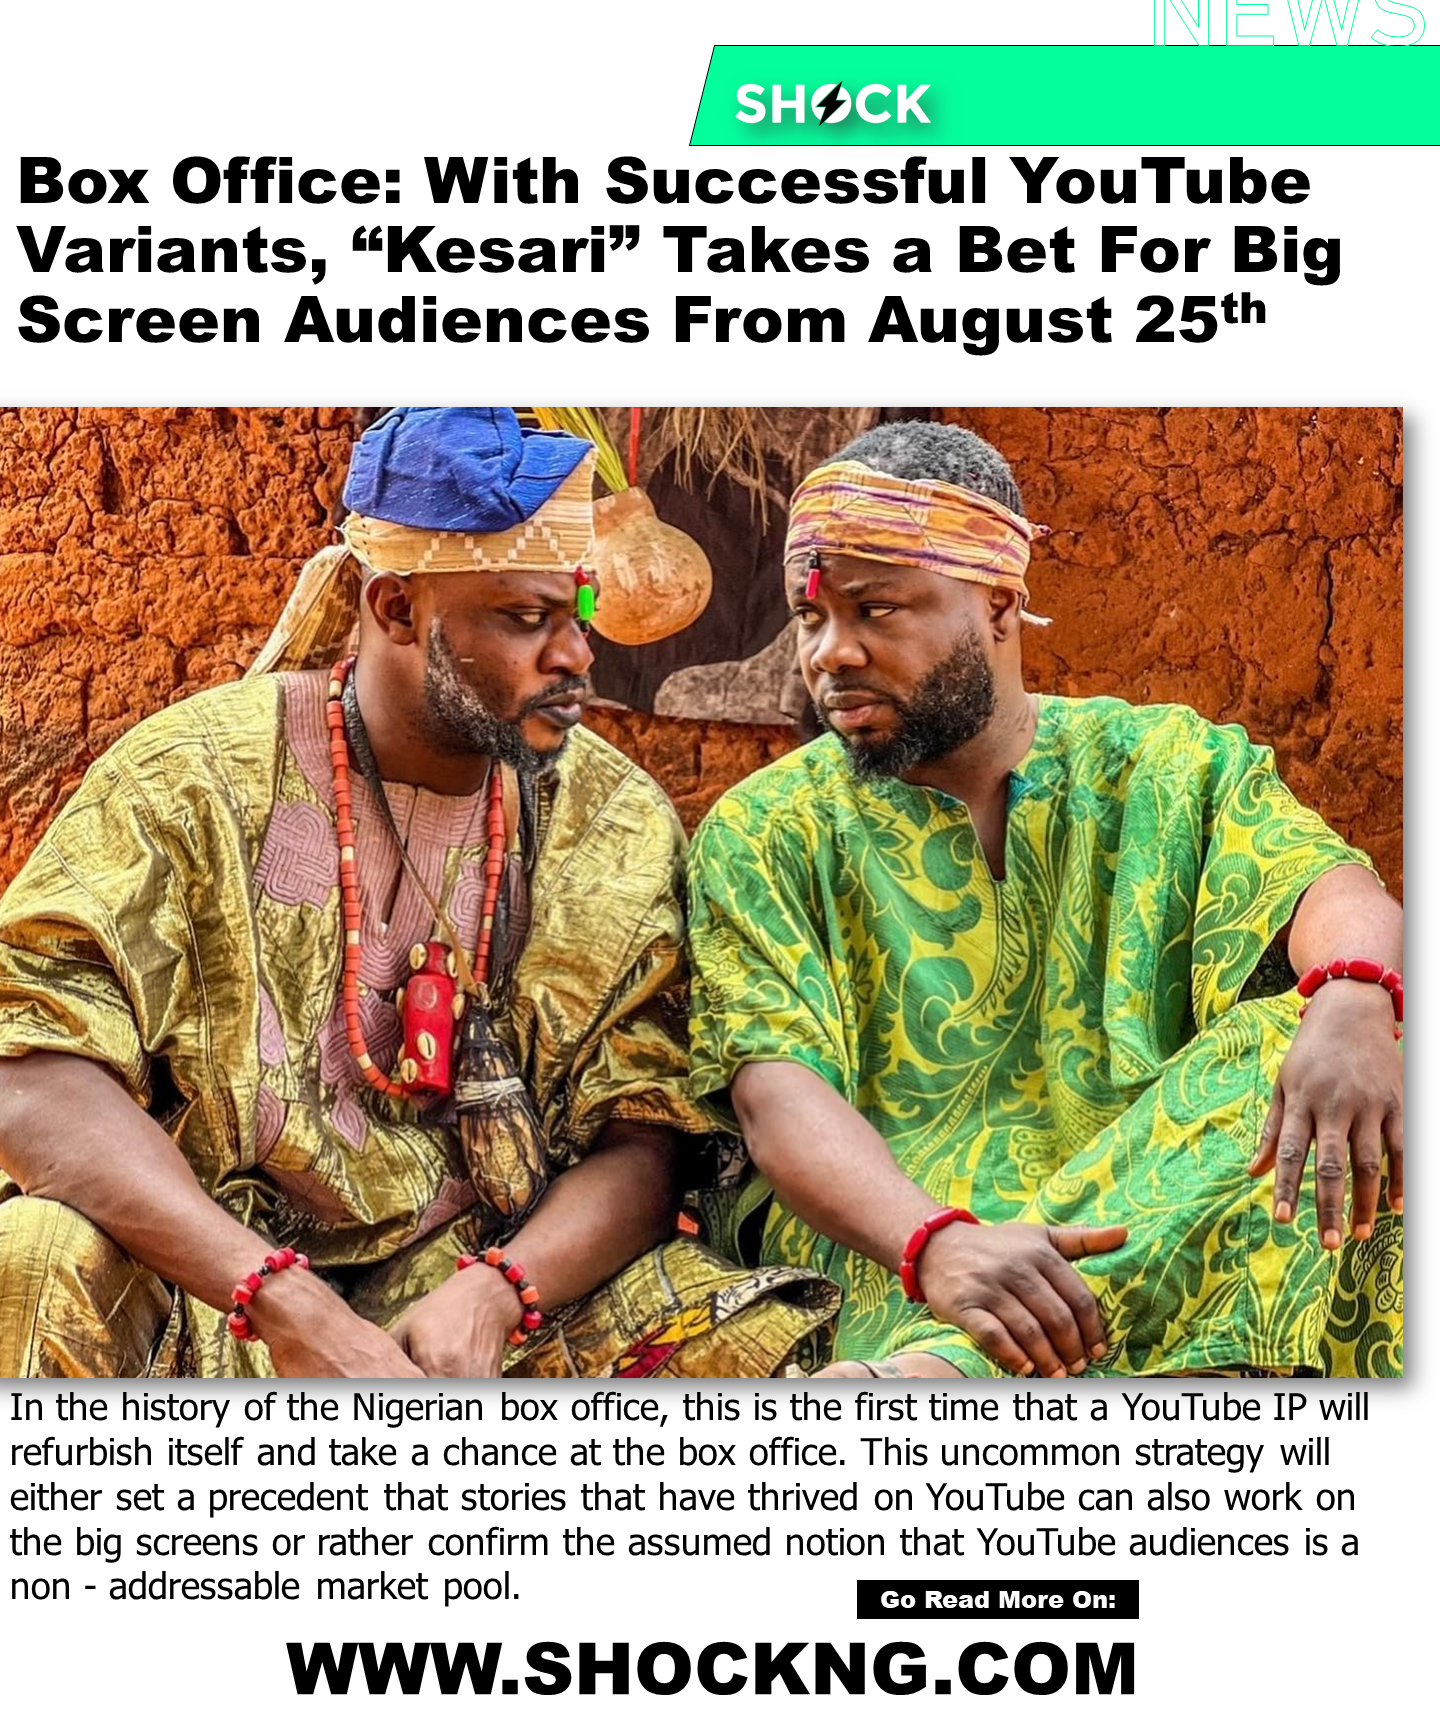 Kesari box office Nigerian movie - With Successful YouTube Variants, “Kesari” Takes a Bet On The Big Screen